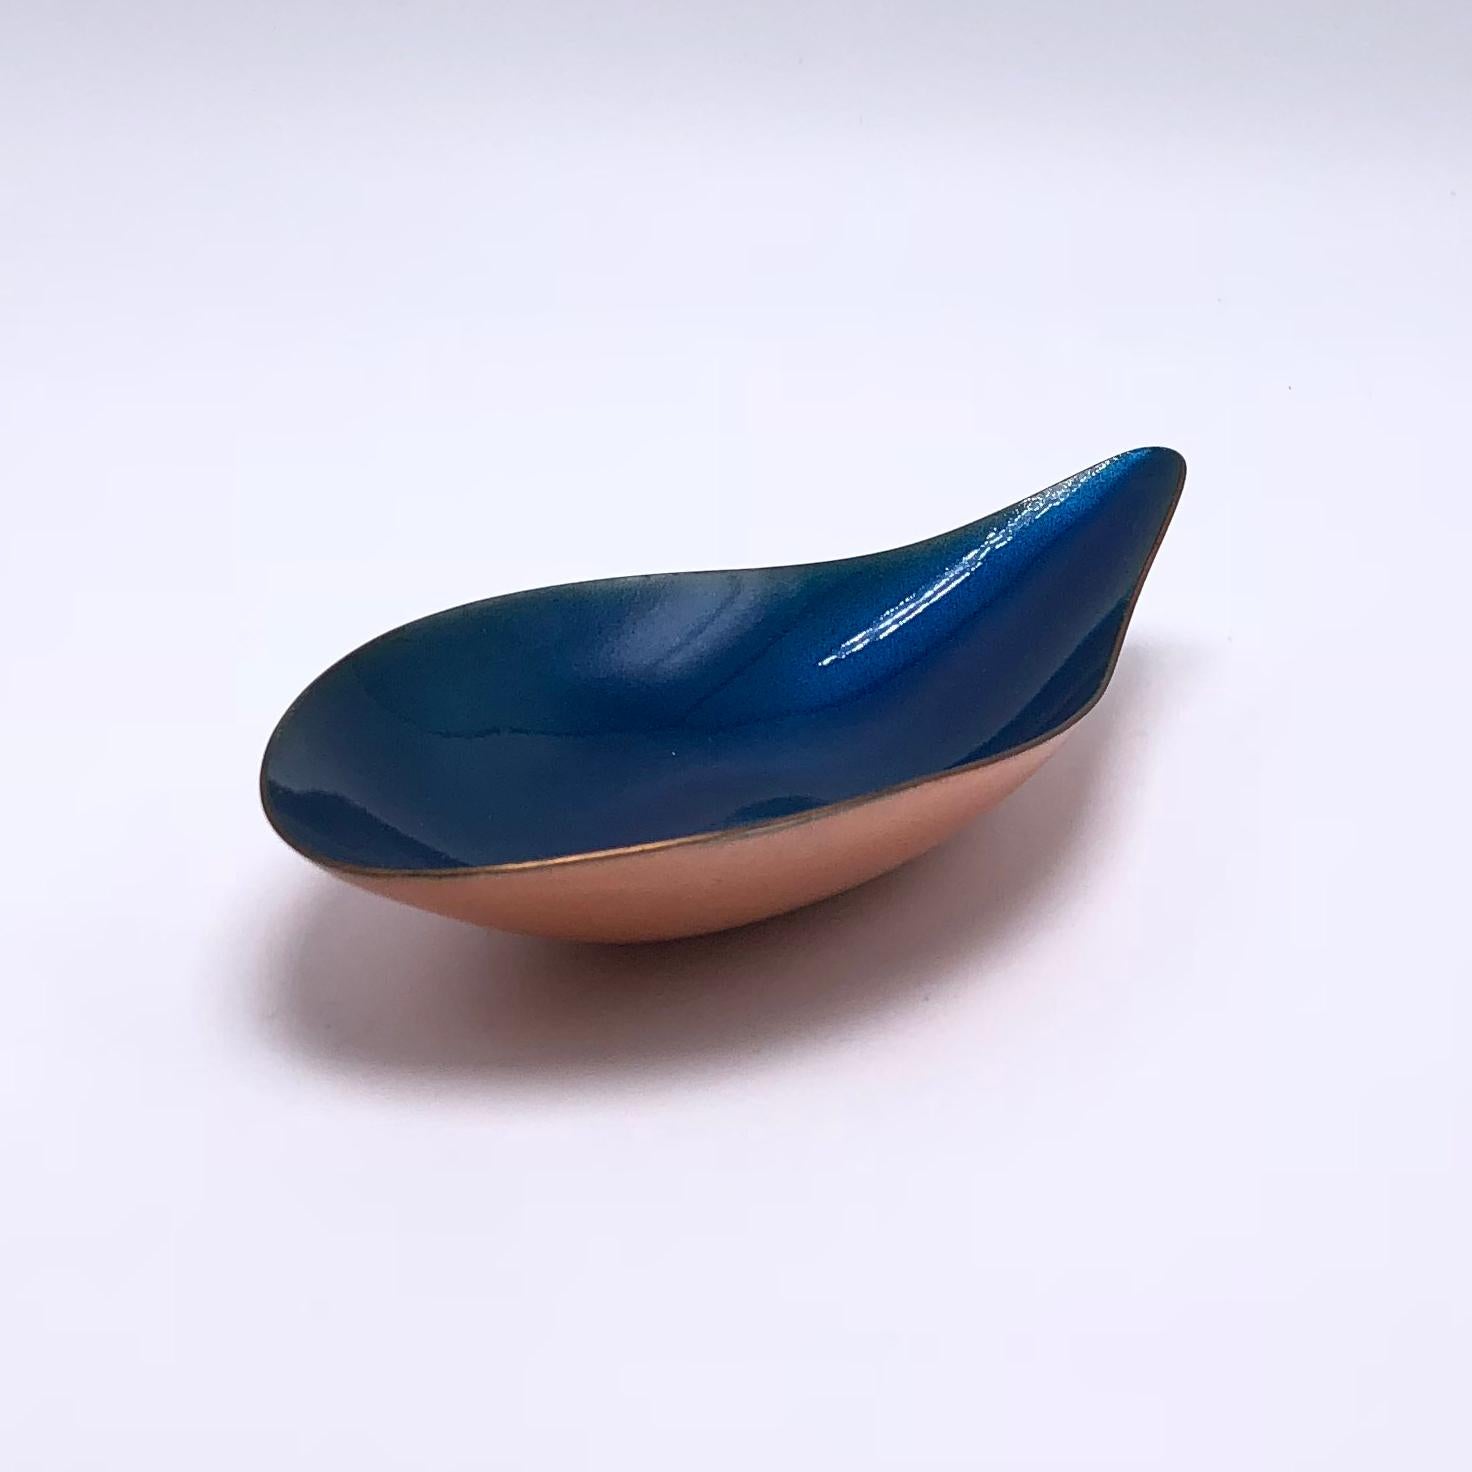 Signed Leon Statham blue enamel on copper bowl, circa 1950.